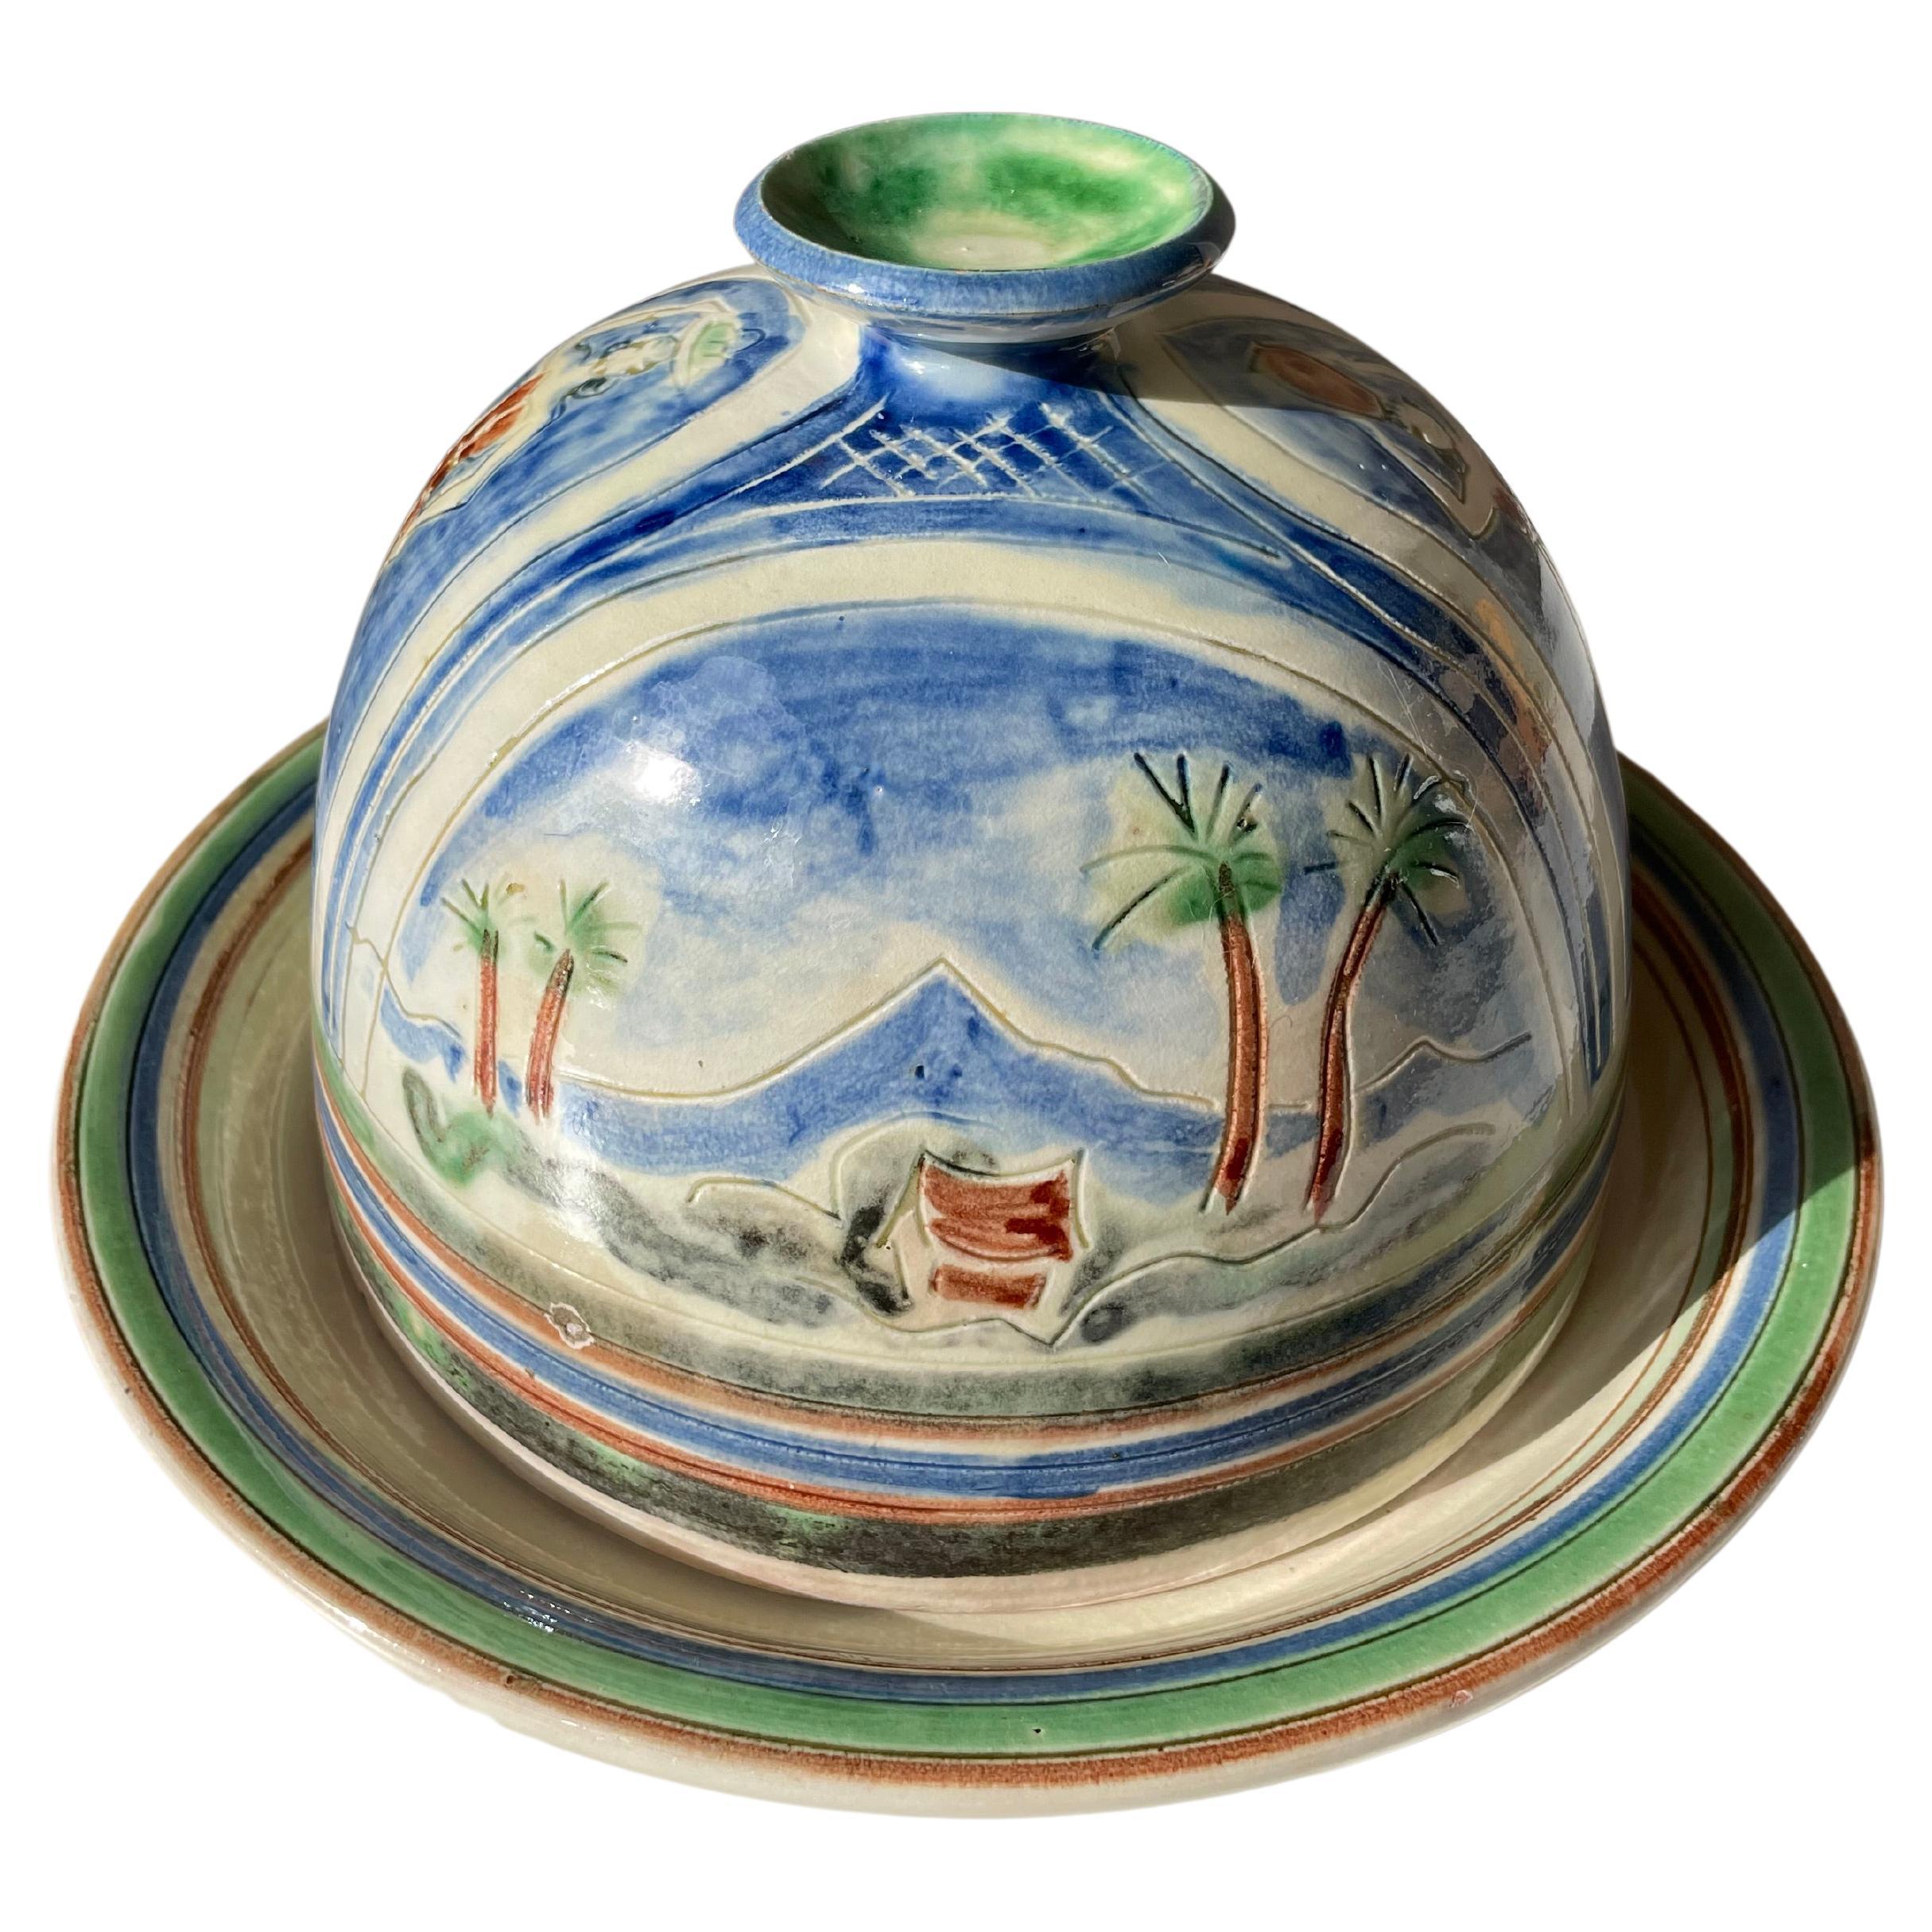 Handmade Danish 1950s Tropic Decor Ceramic Dome And Plate For Sale